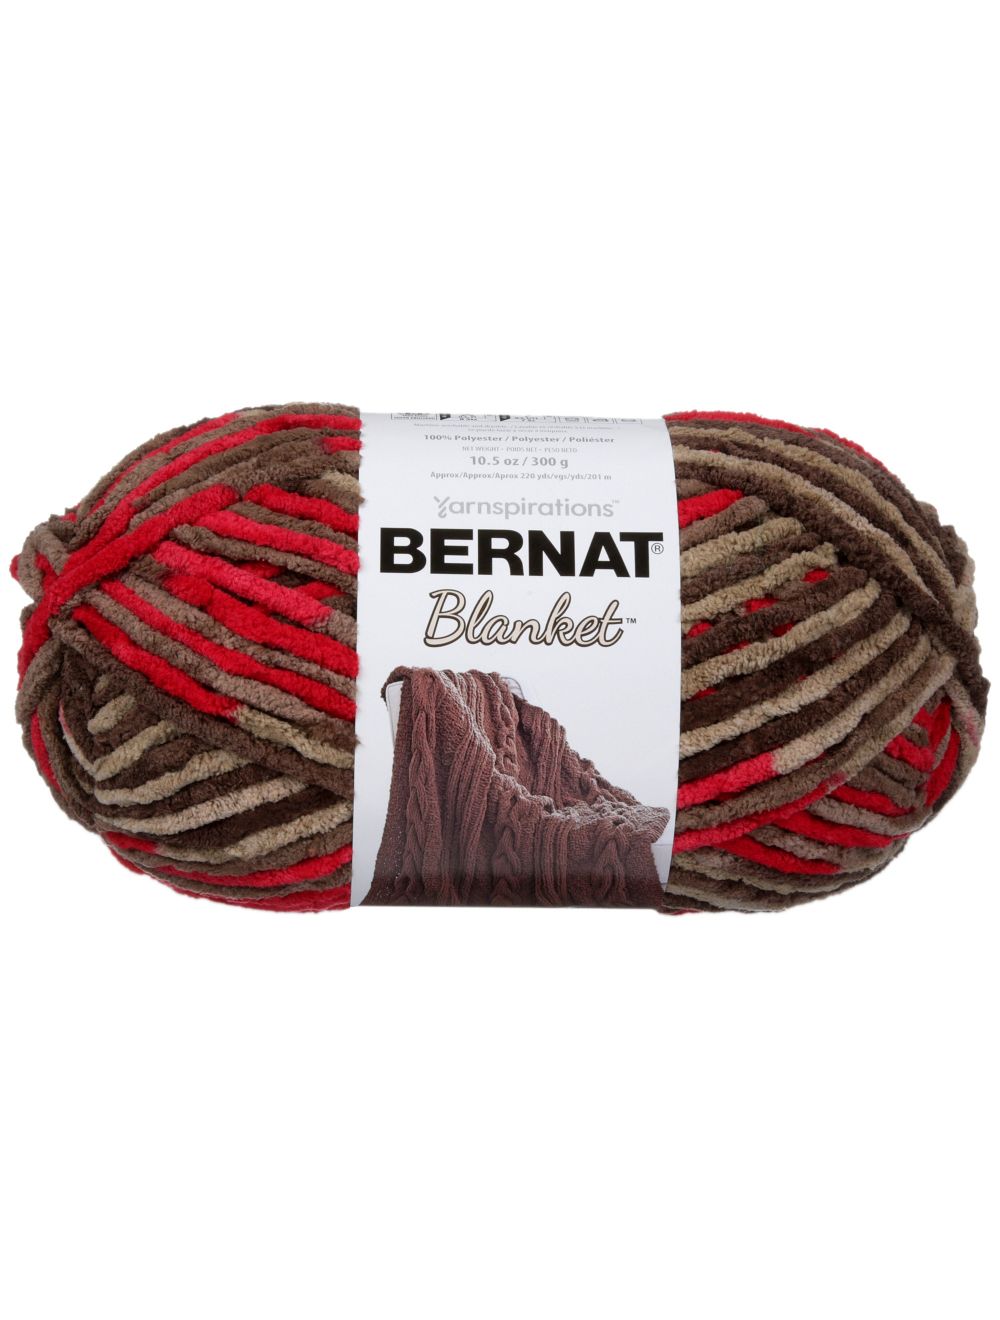 Bernat Blanket Big Ball Yarn-Raspberry Trifle (NM01319429)